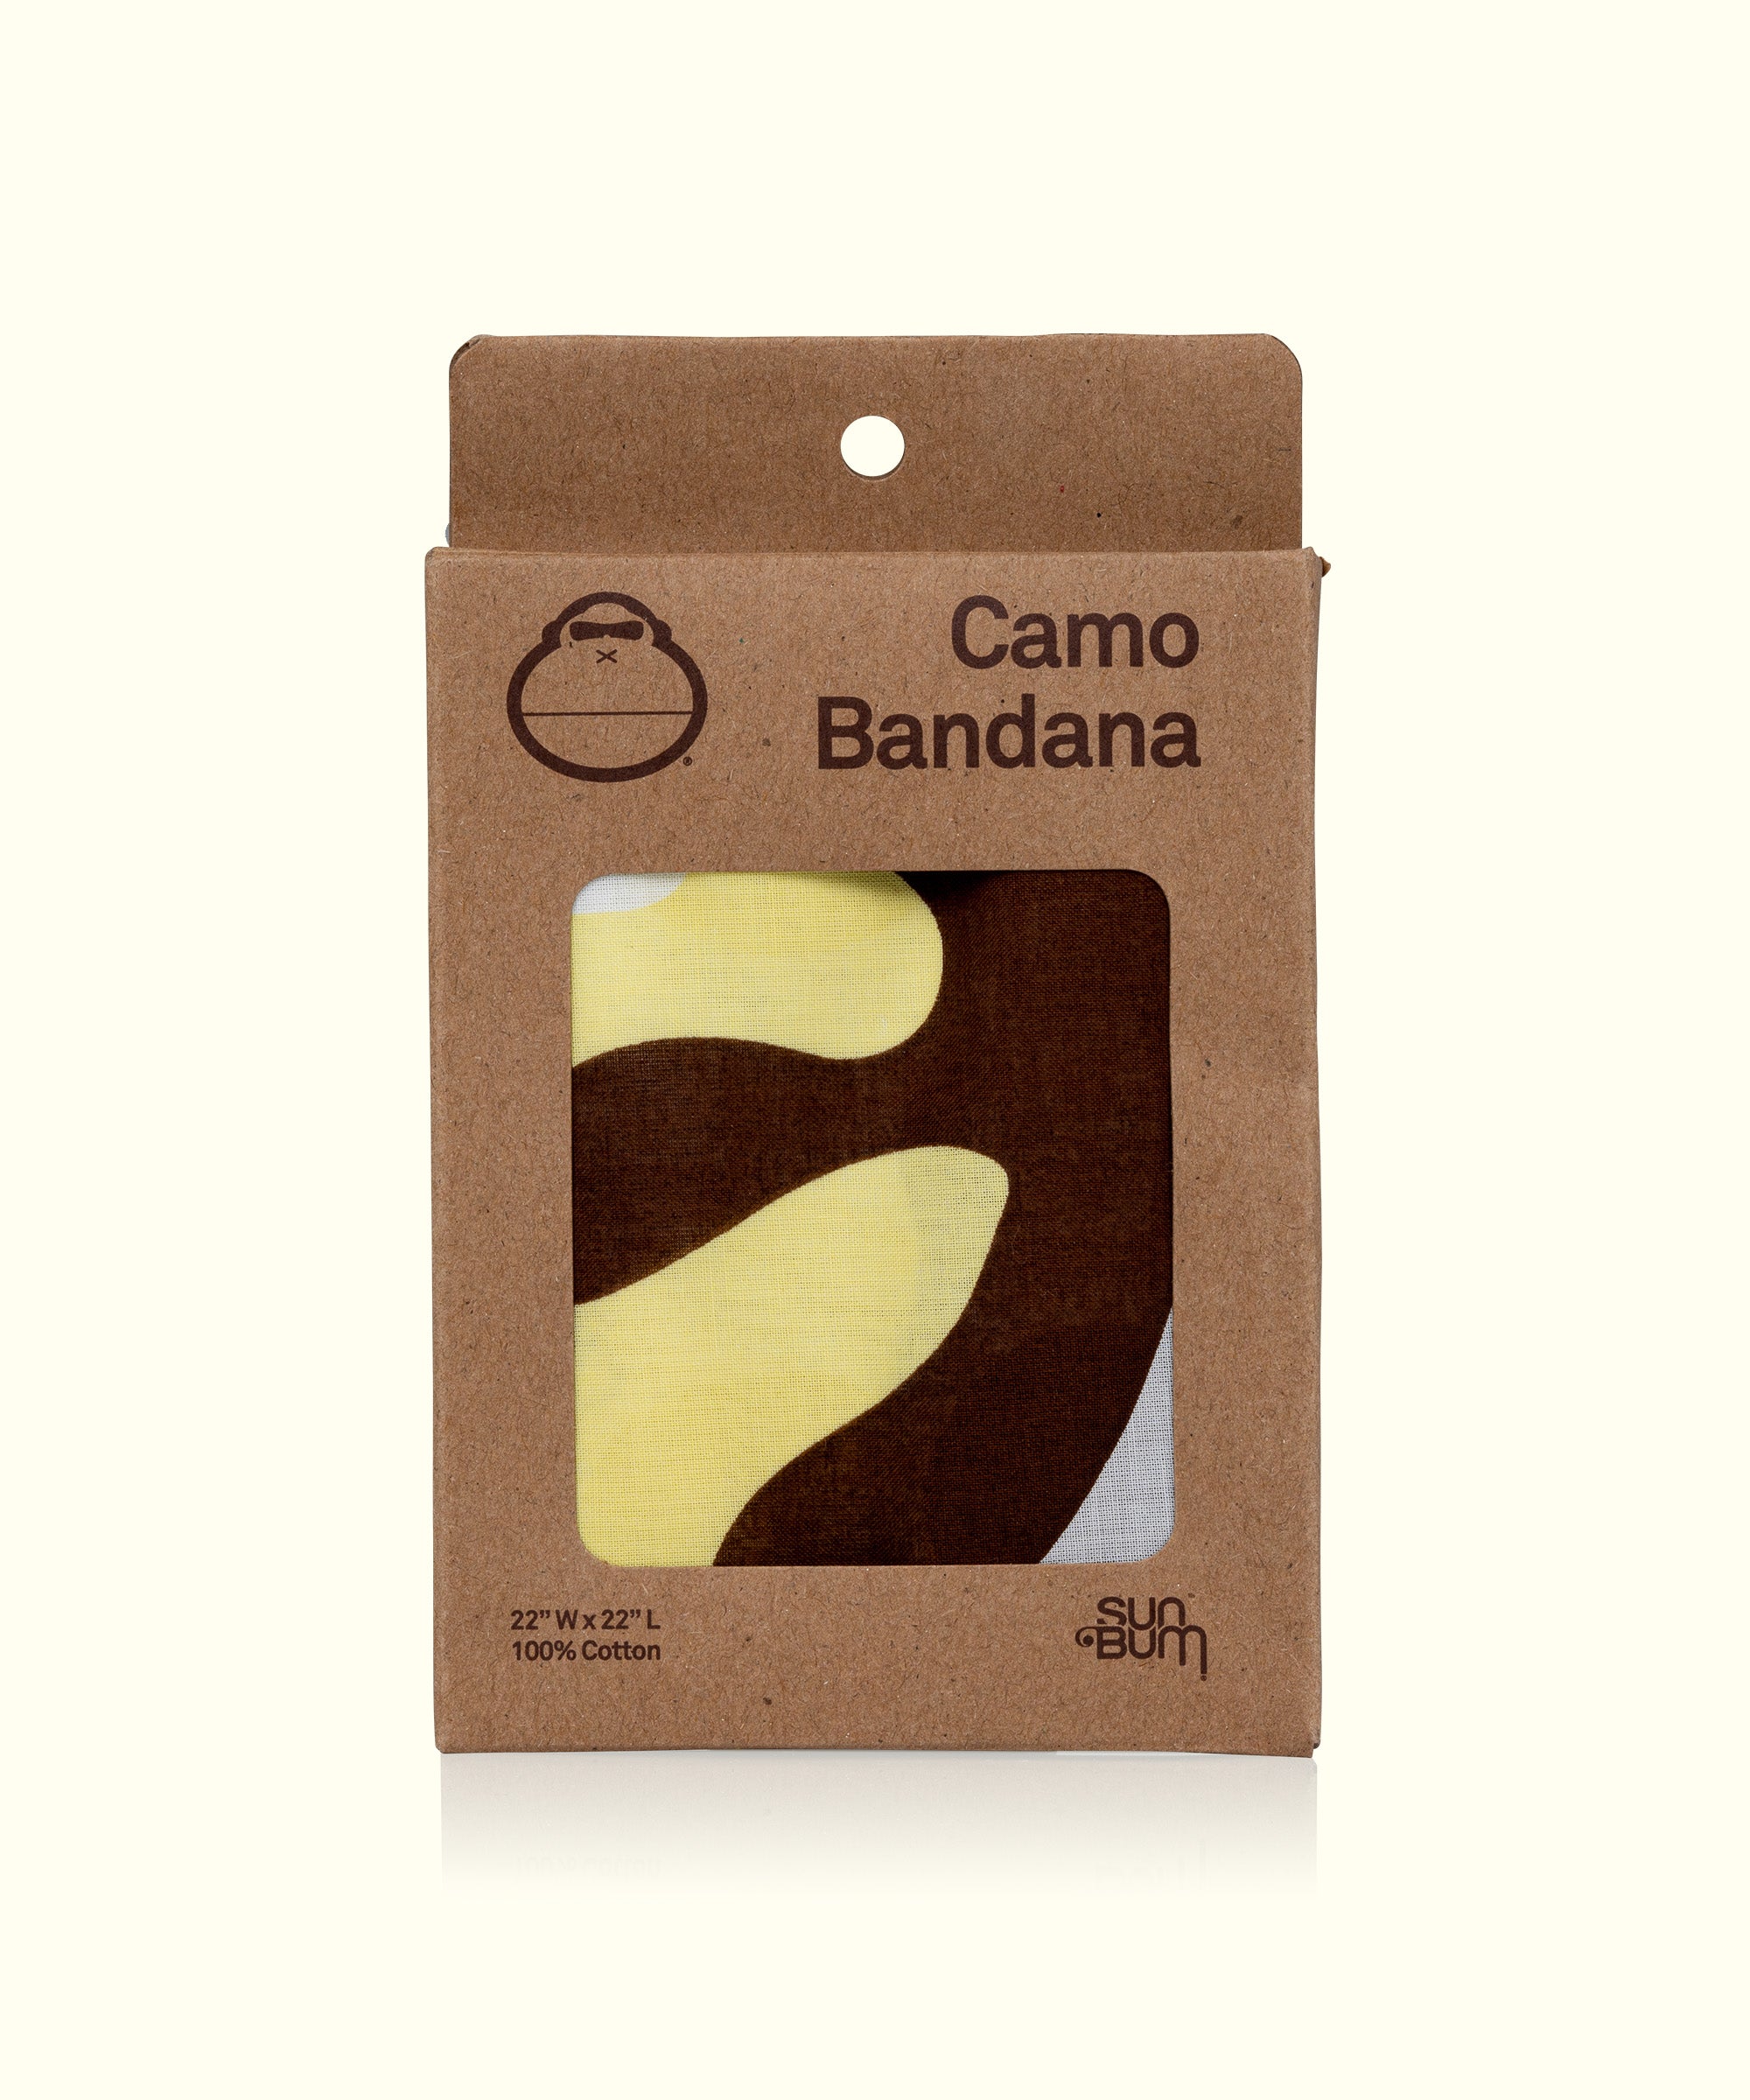 Camo Bandana